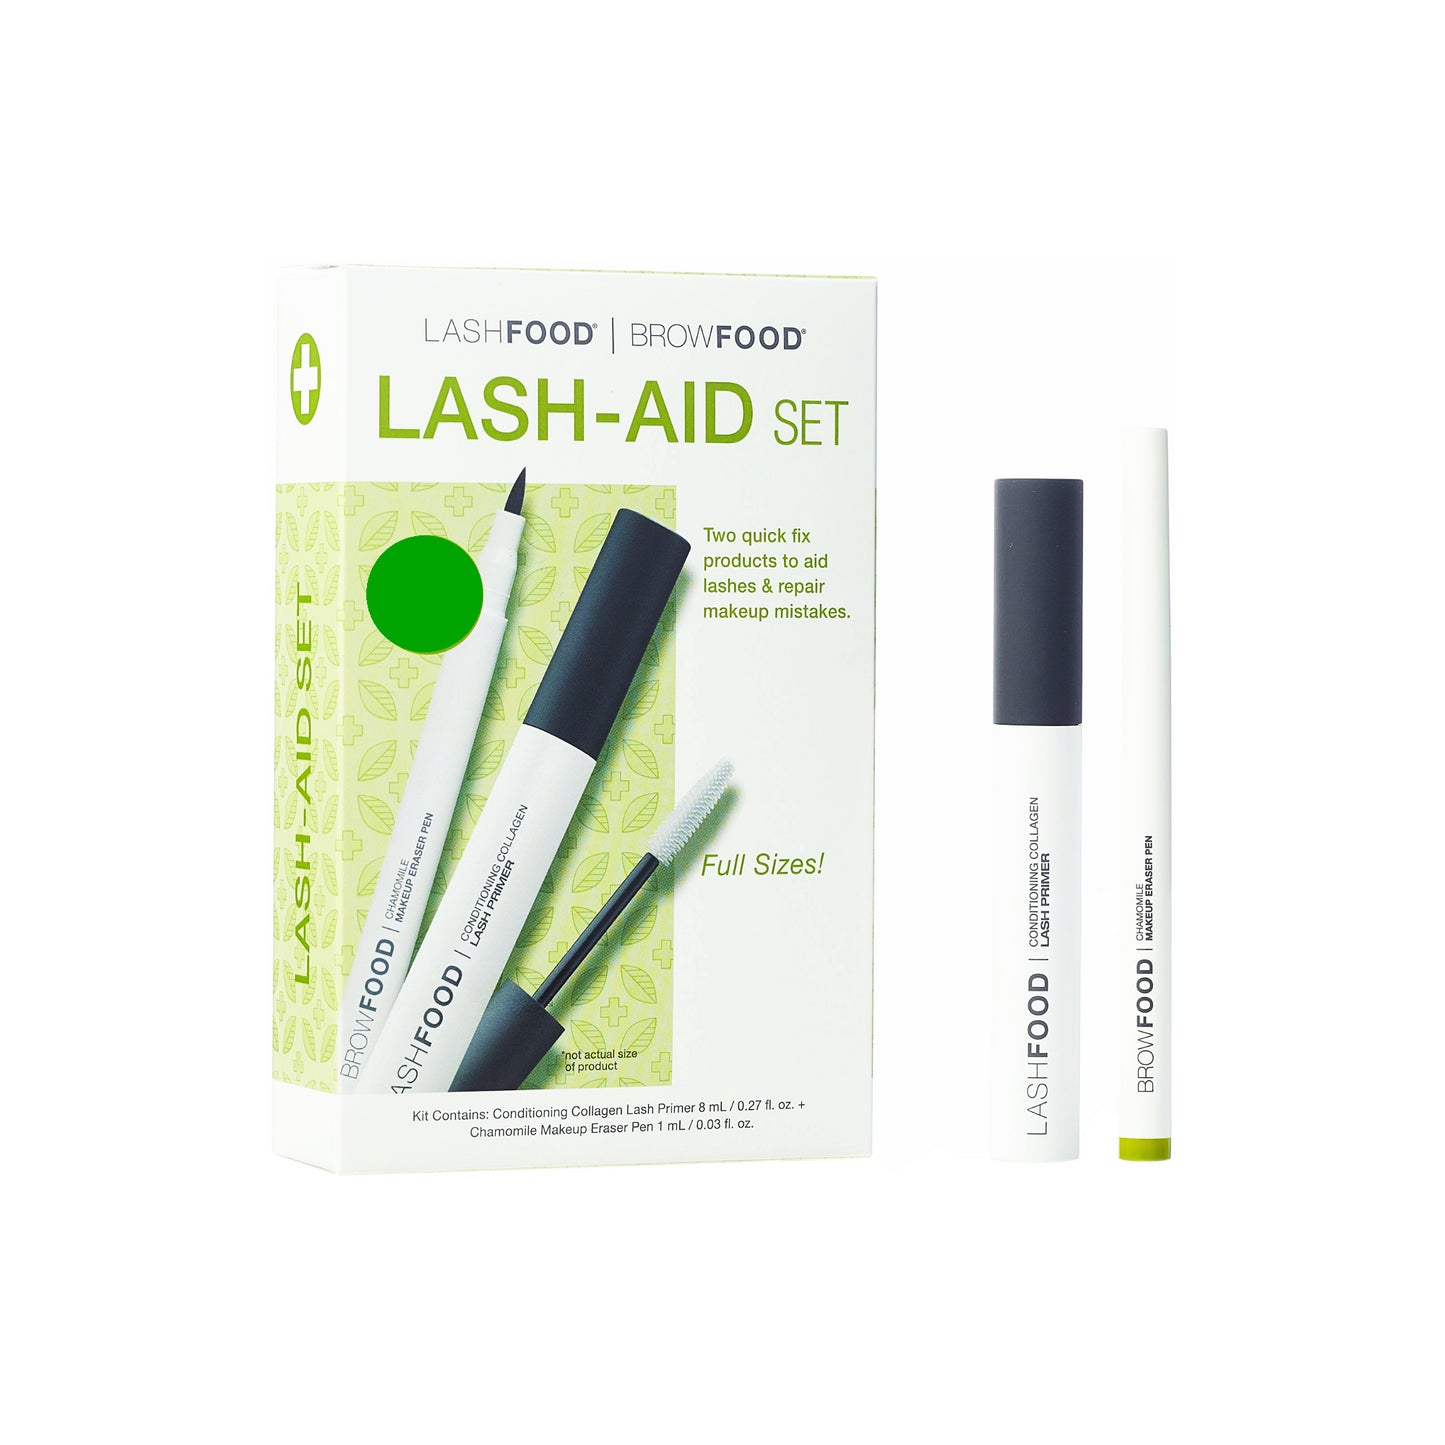 LASHFOOD Lash-Aid Set